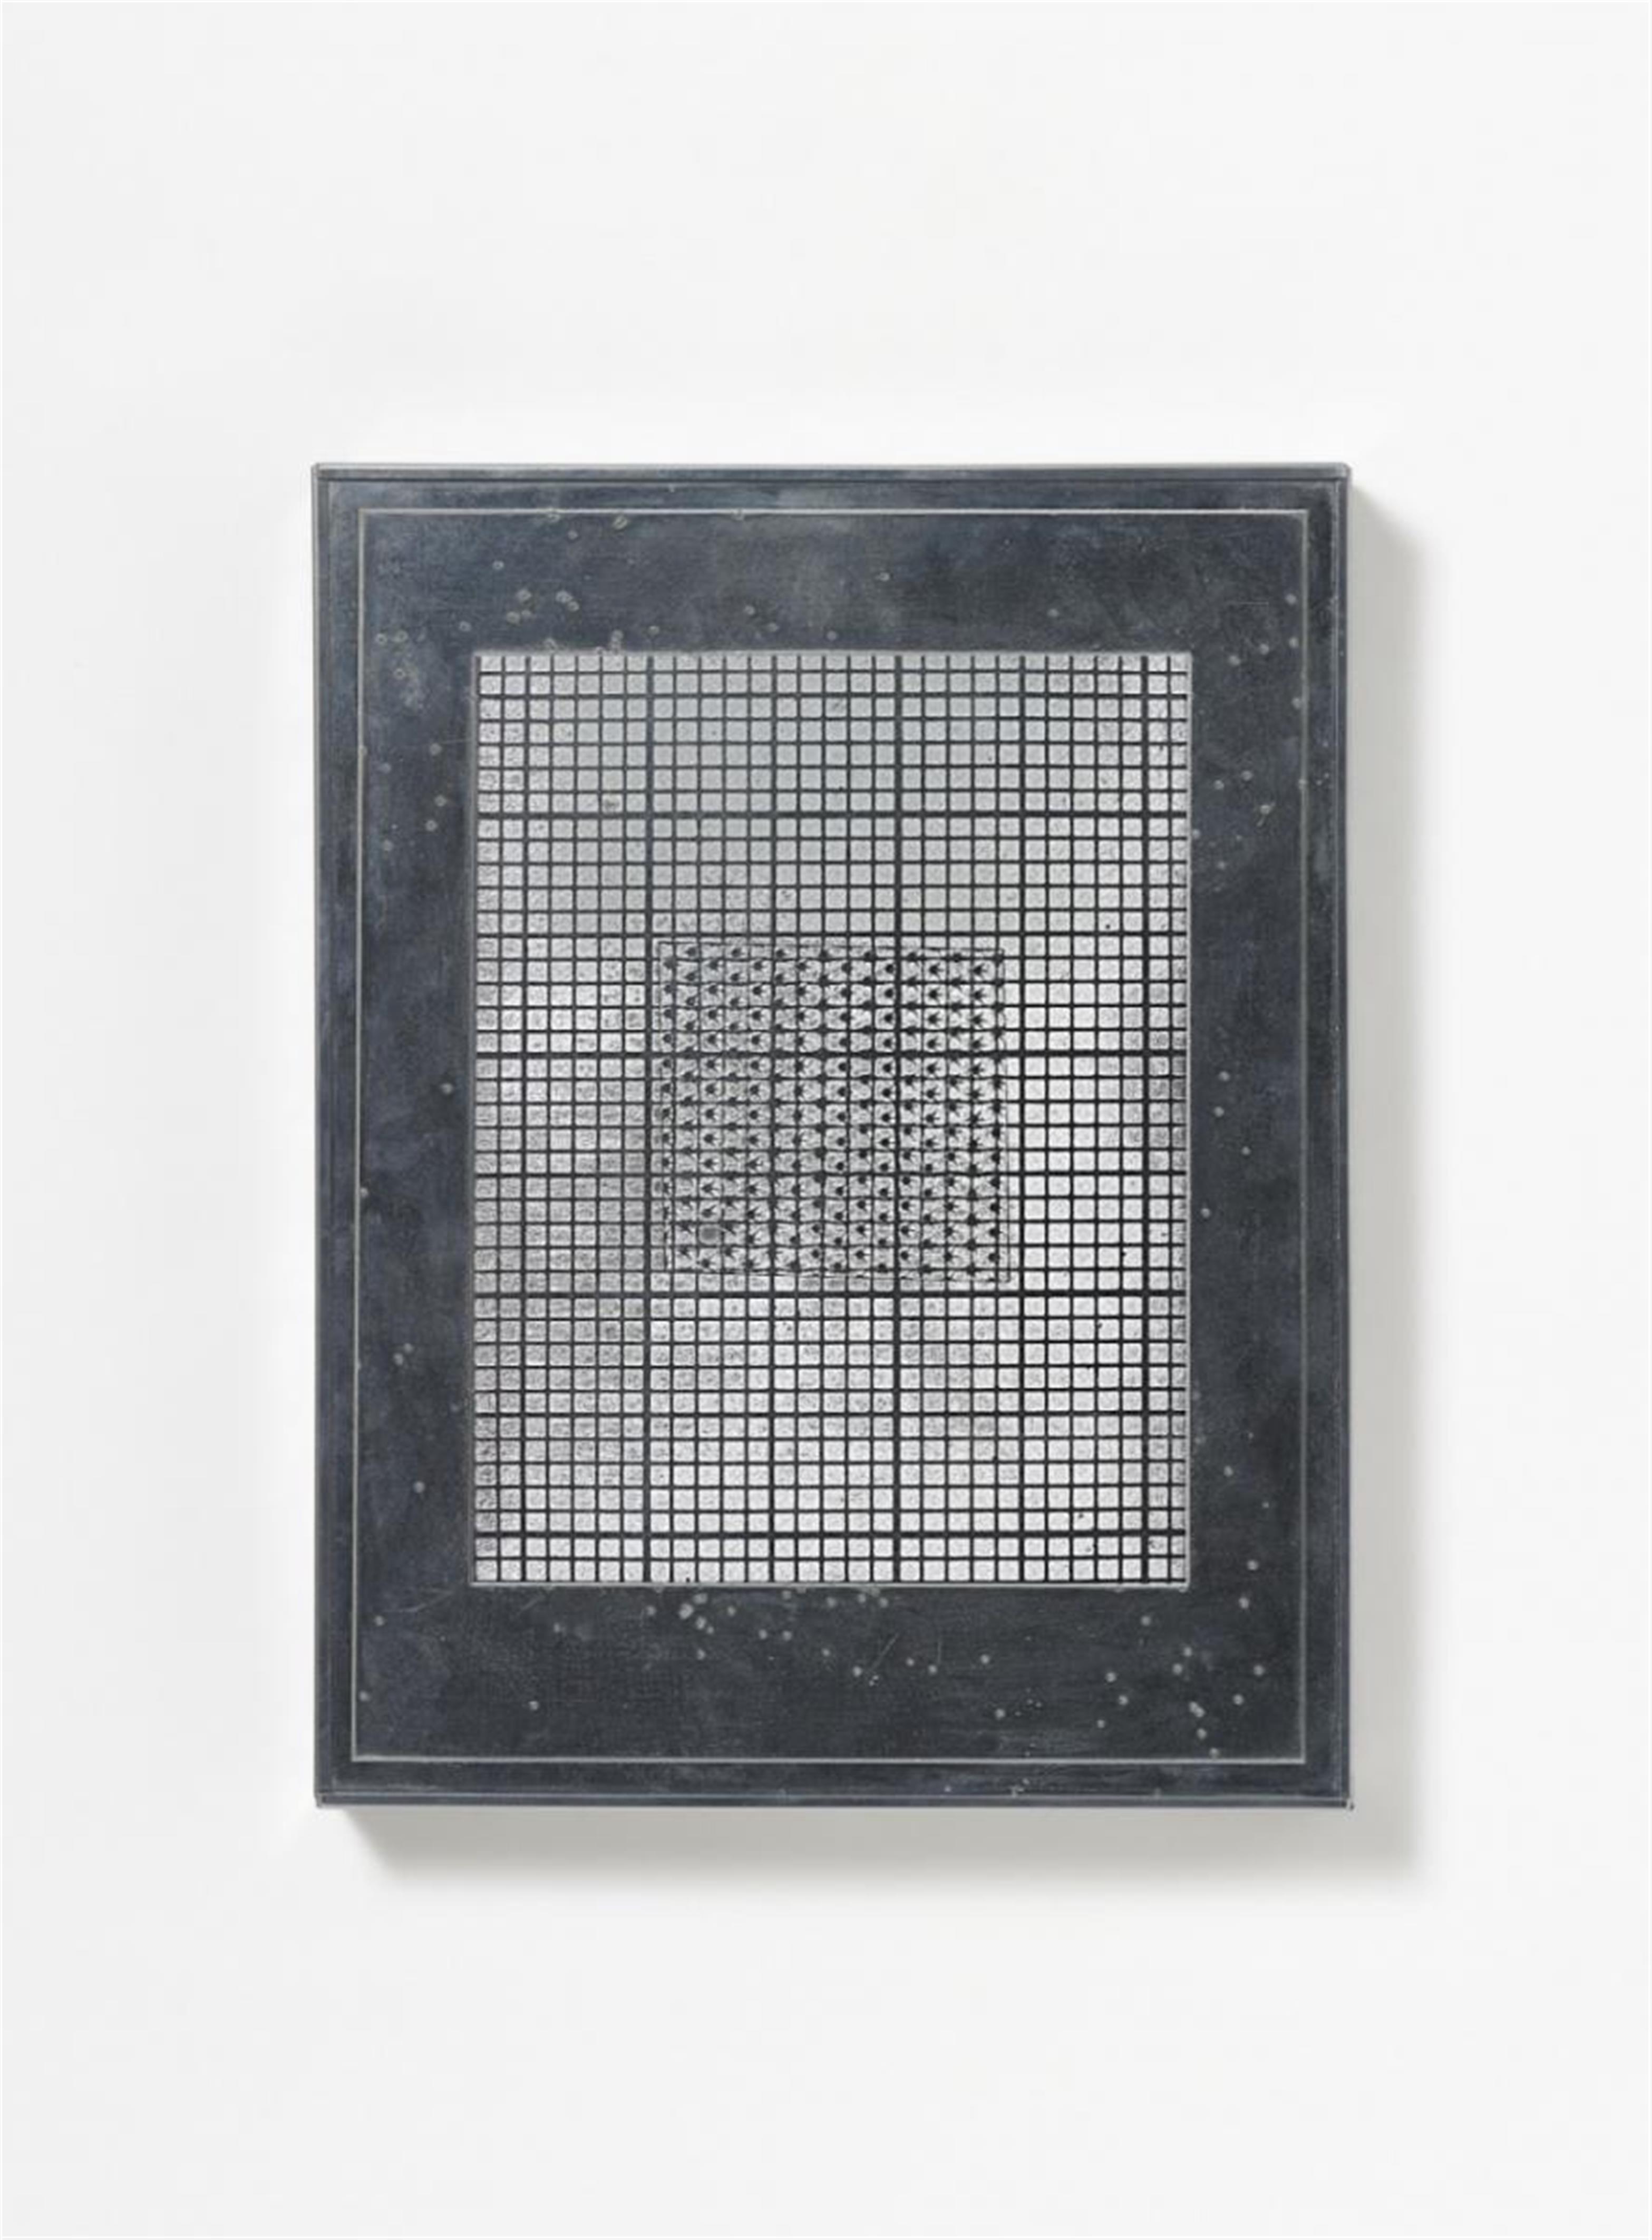 Heinz Mack - Licht-raster (light-grid) - image-1